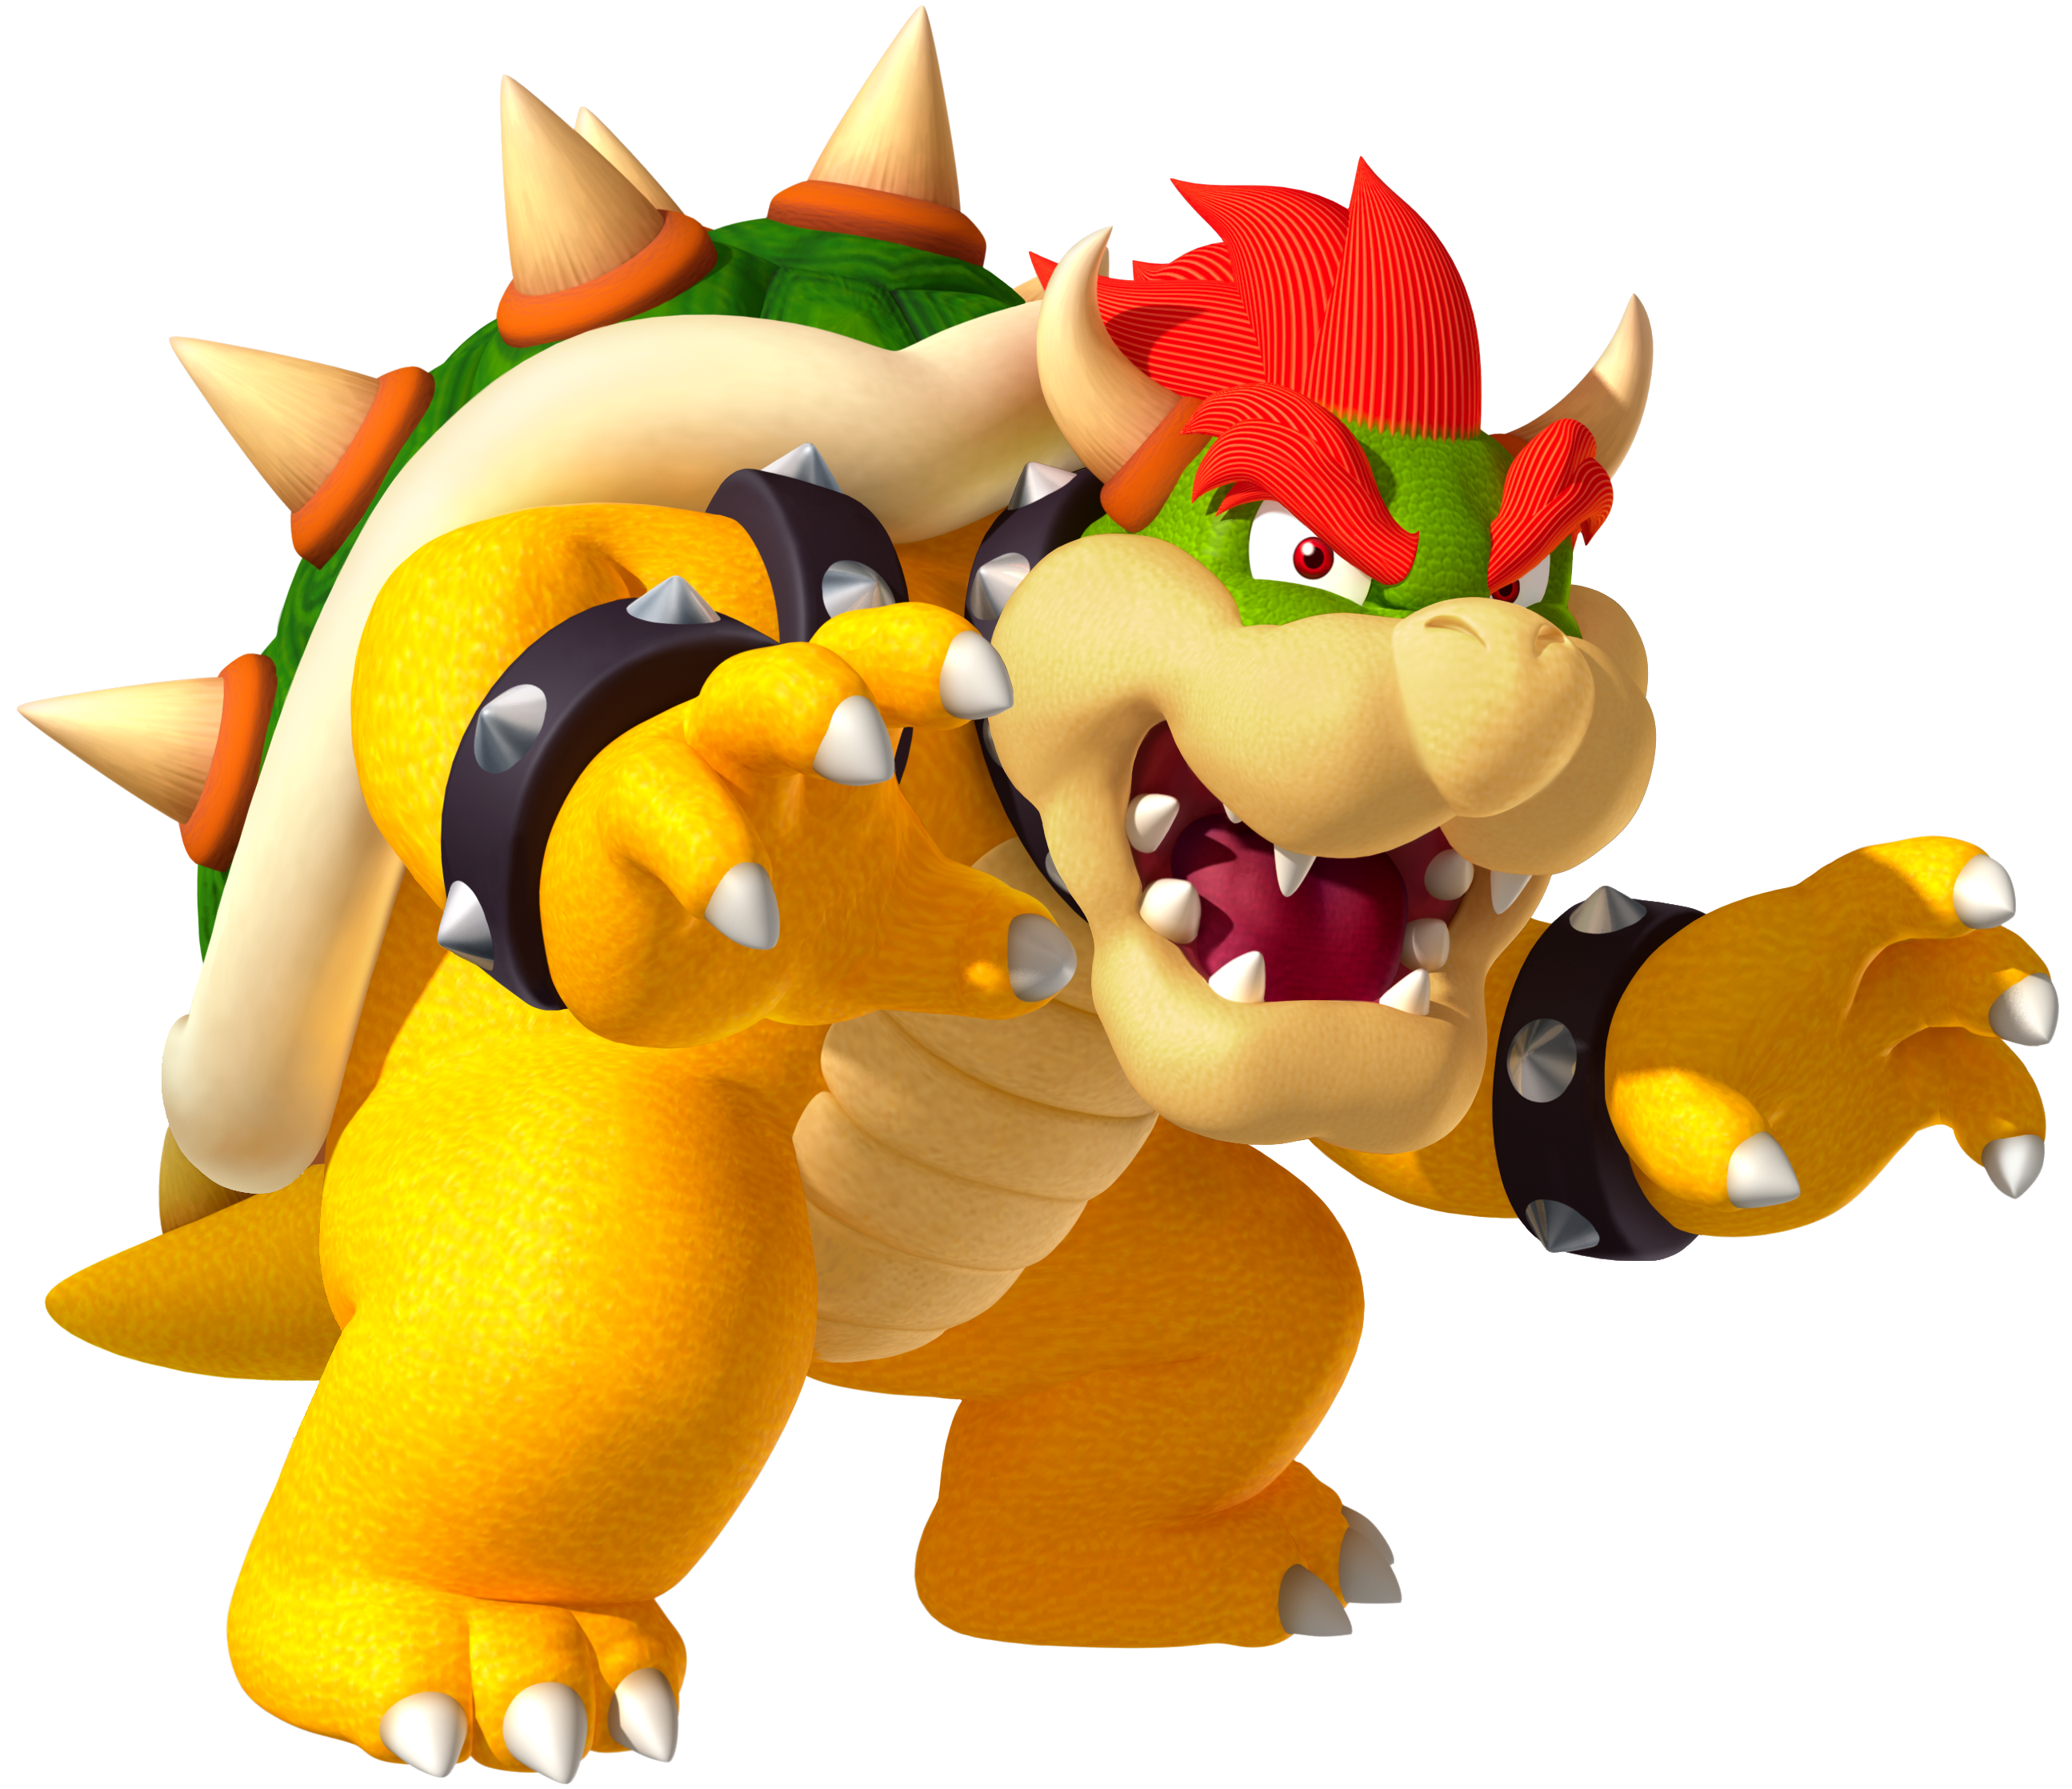 Mario clipart bowser, Mario bowser Transparent FREE for